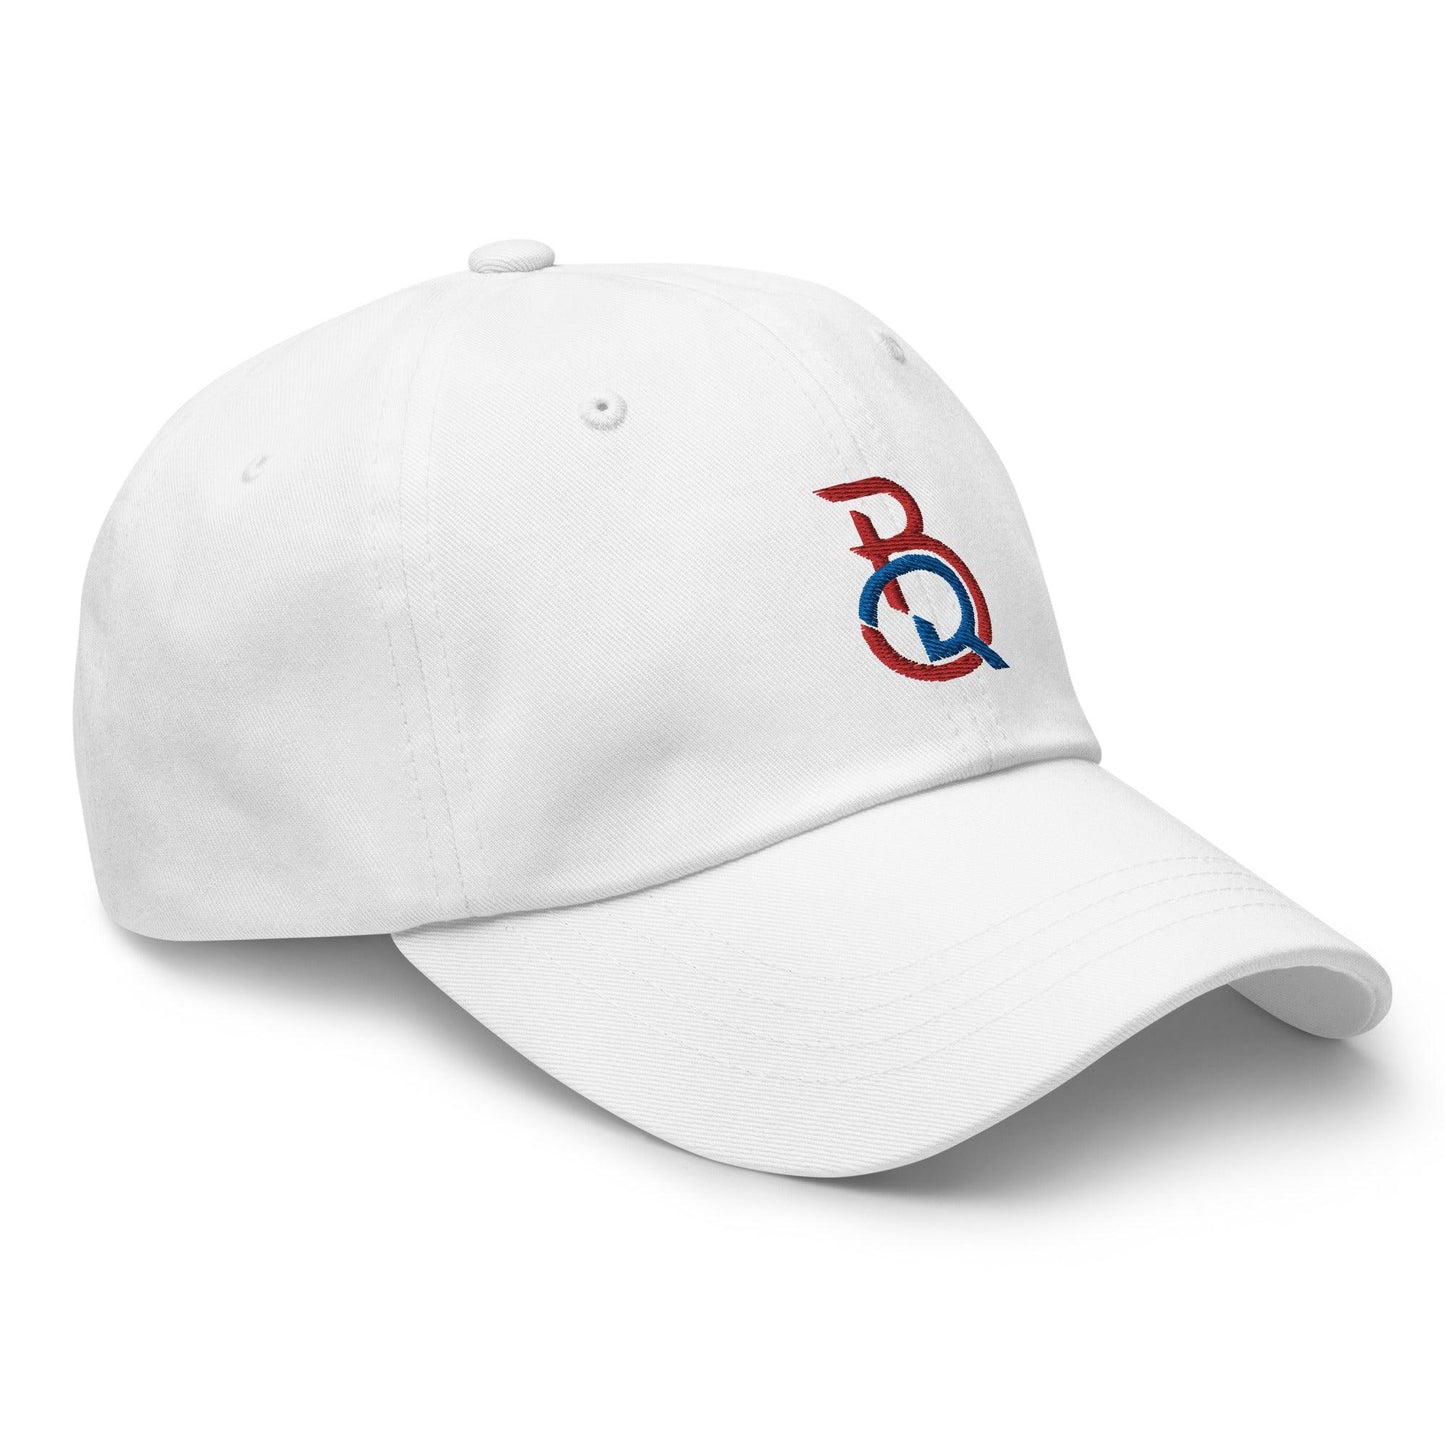 Baron Radcliff “Signature” hat - Fan Arch